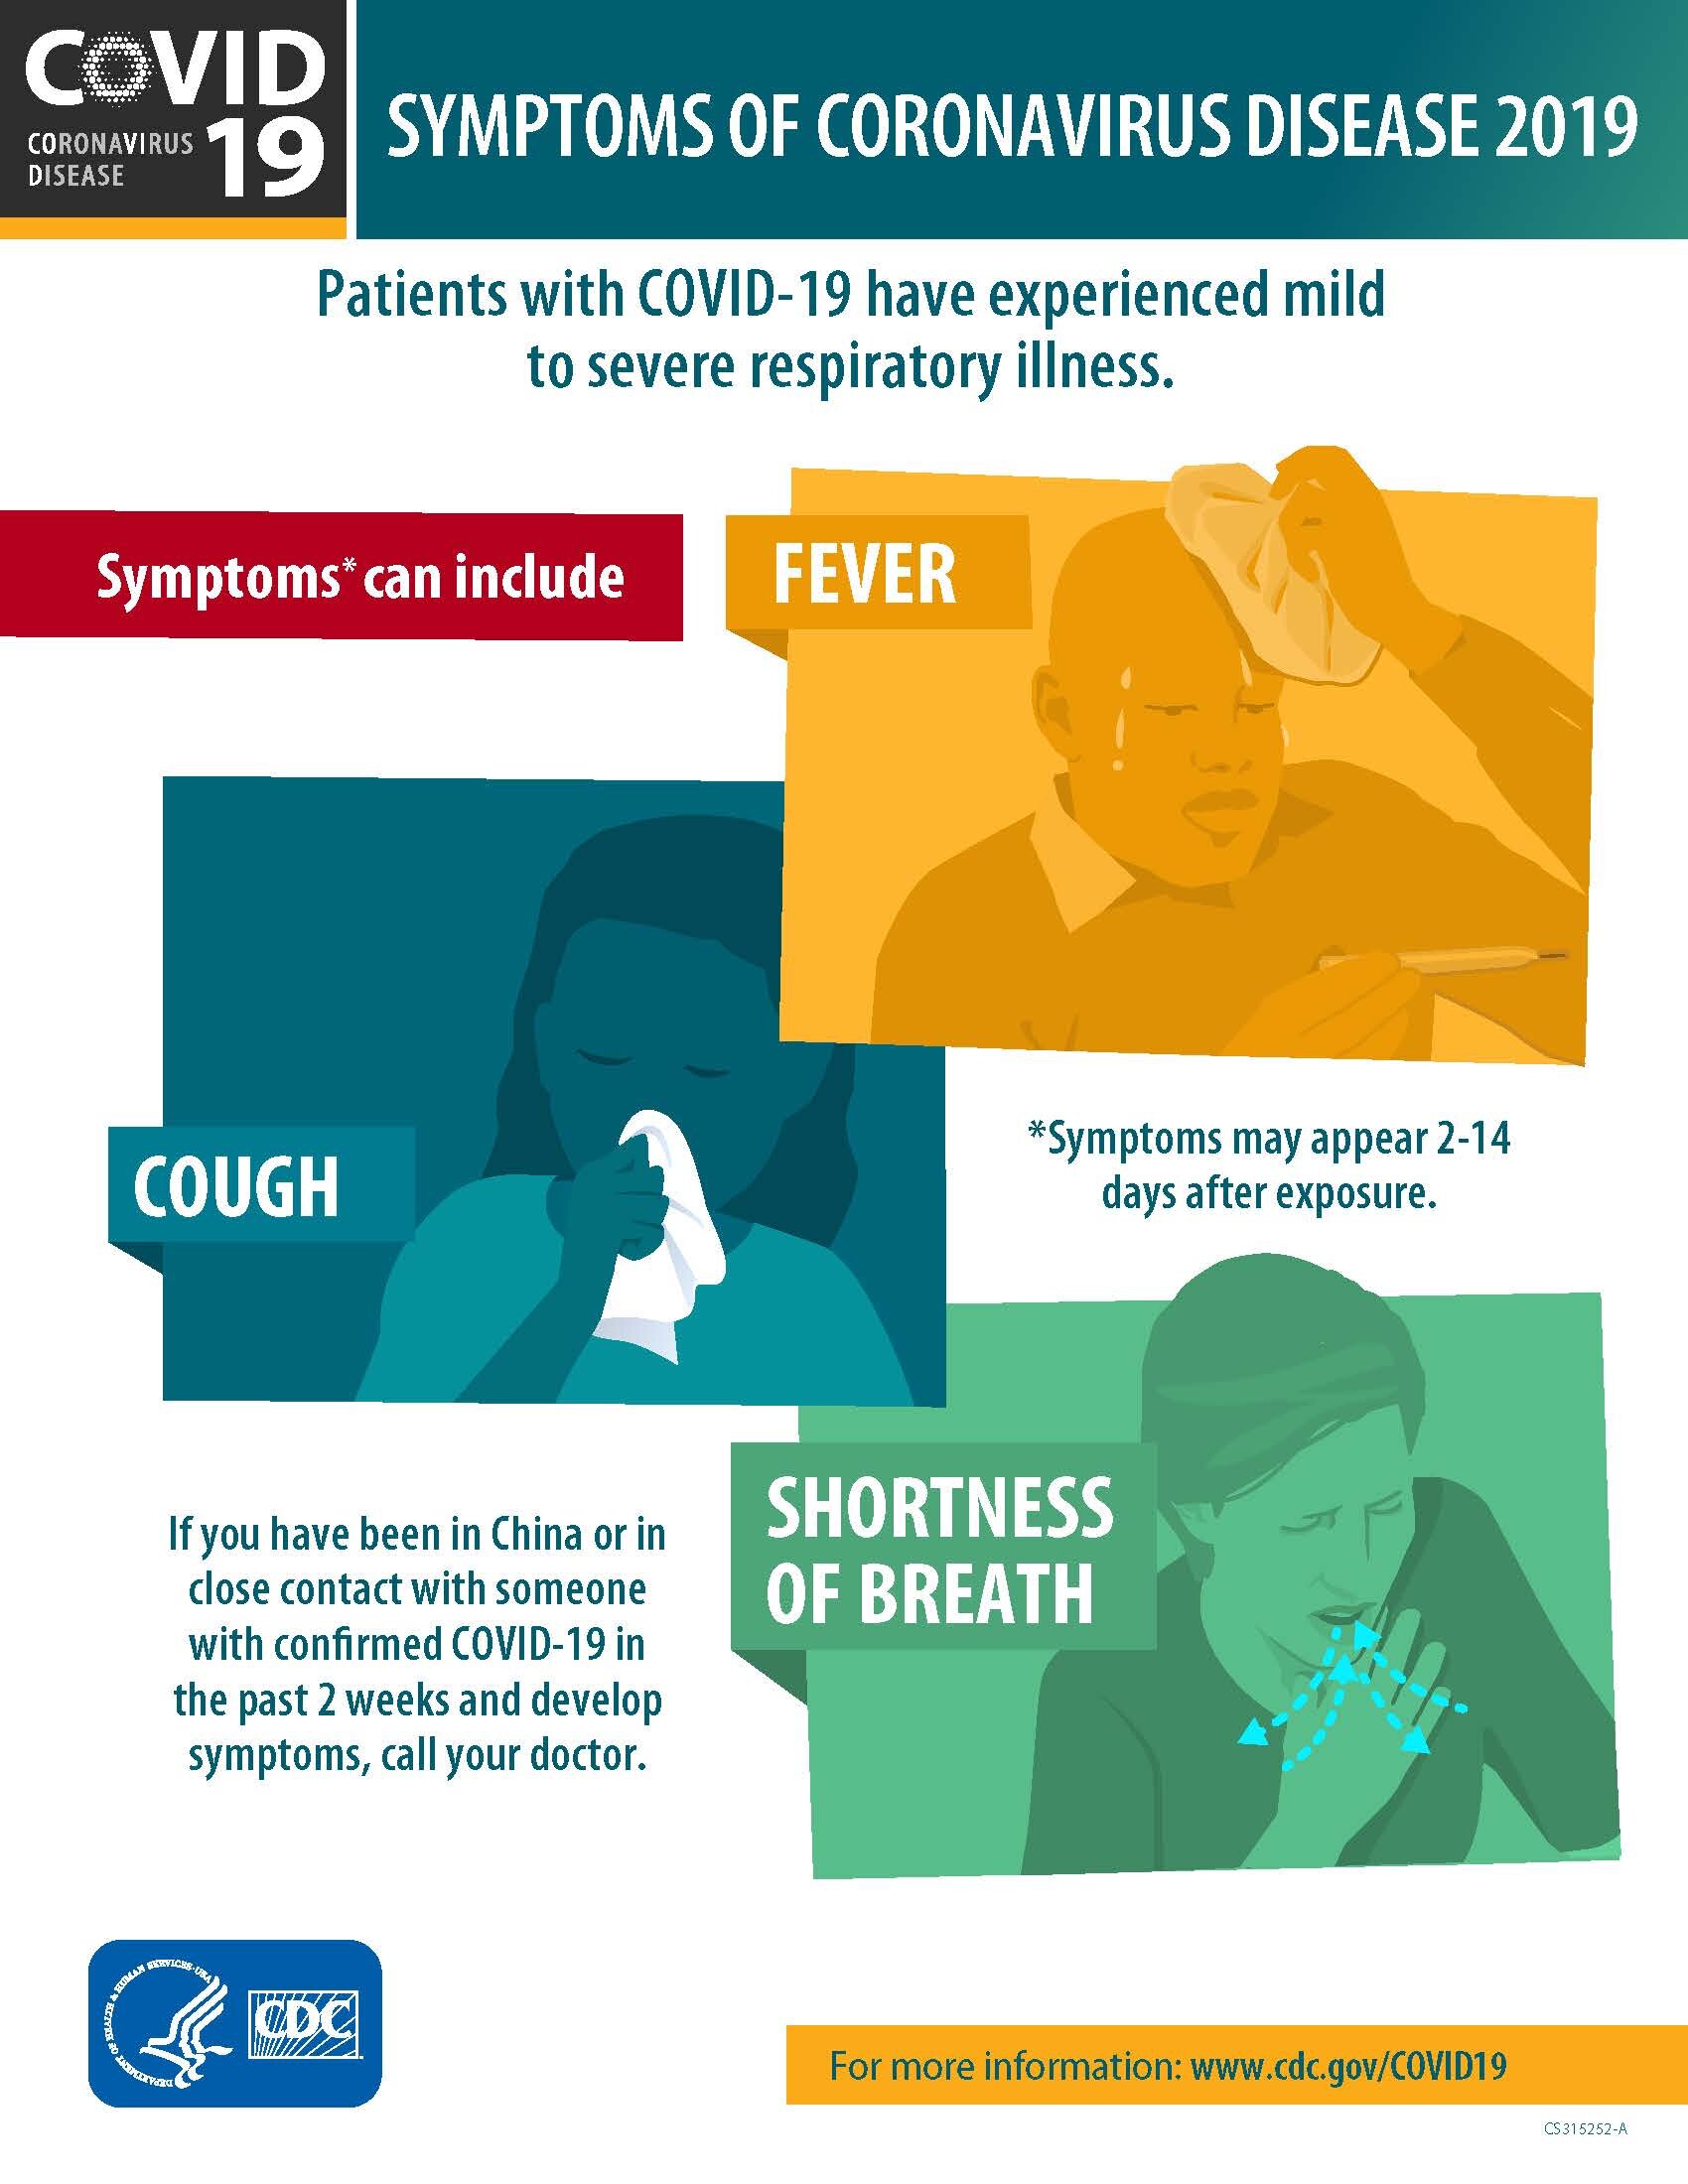 COVID19-symptoms.jpg